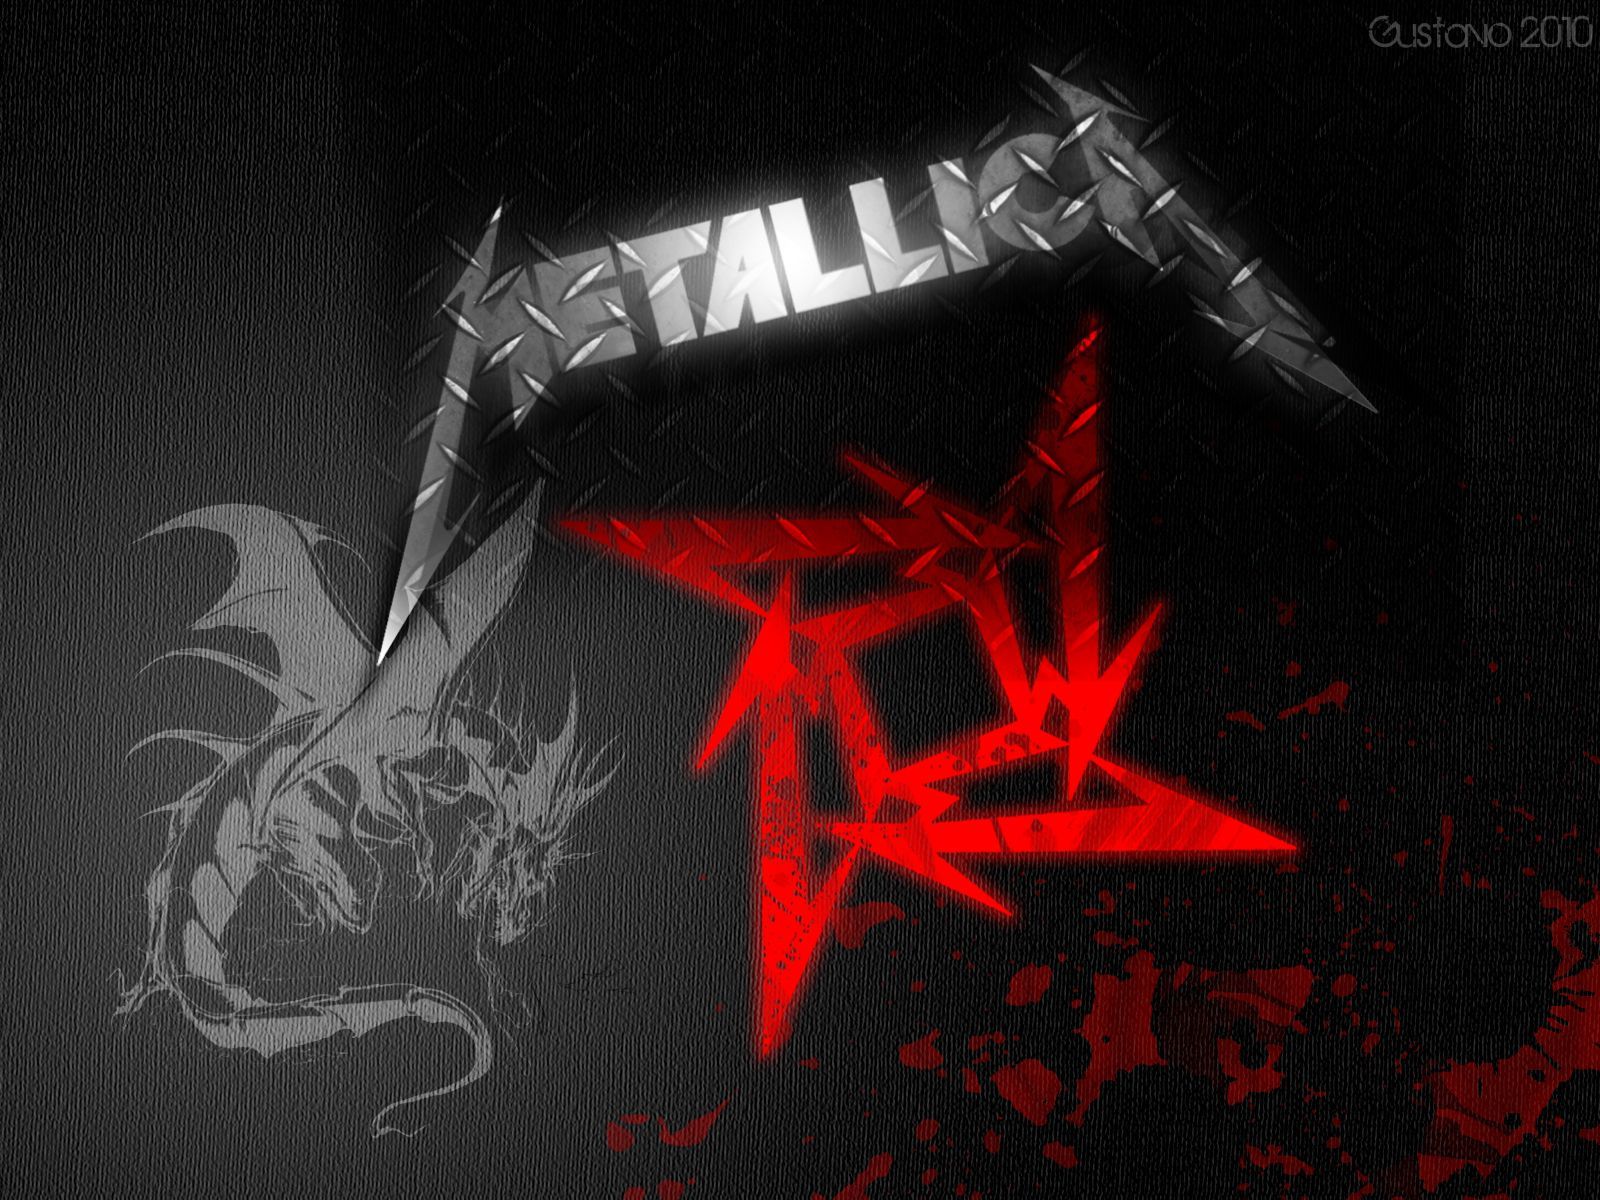 1 Awesome Metallica wallpaper Metallica wallpapers 527